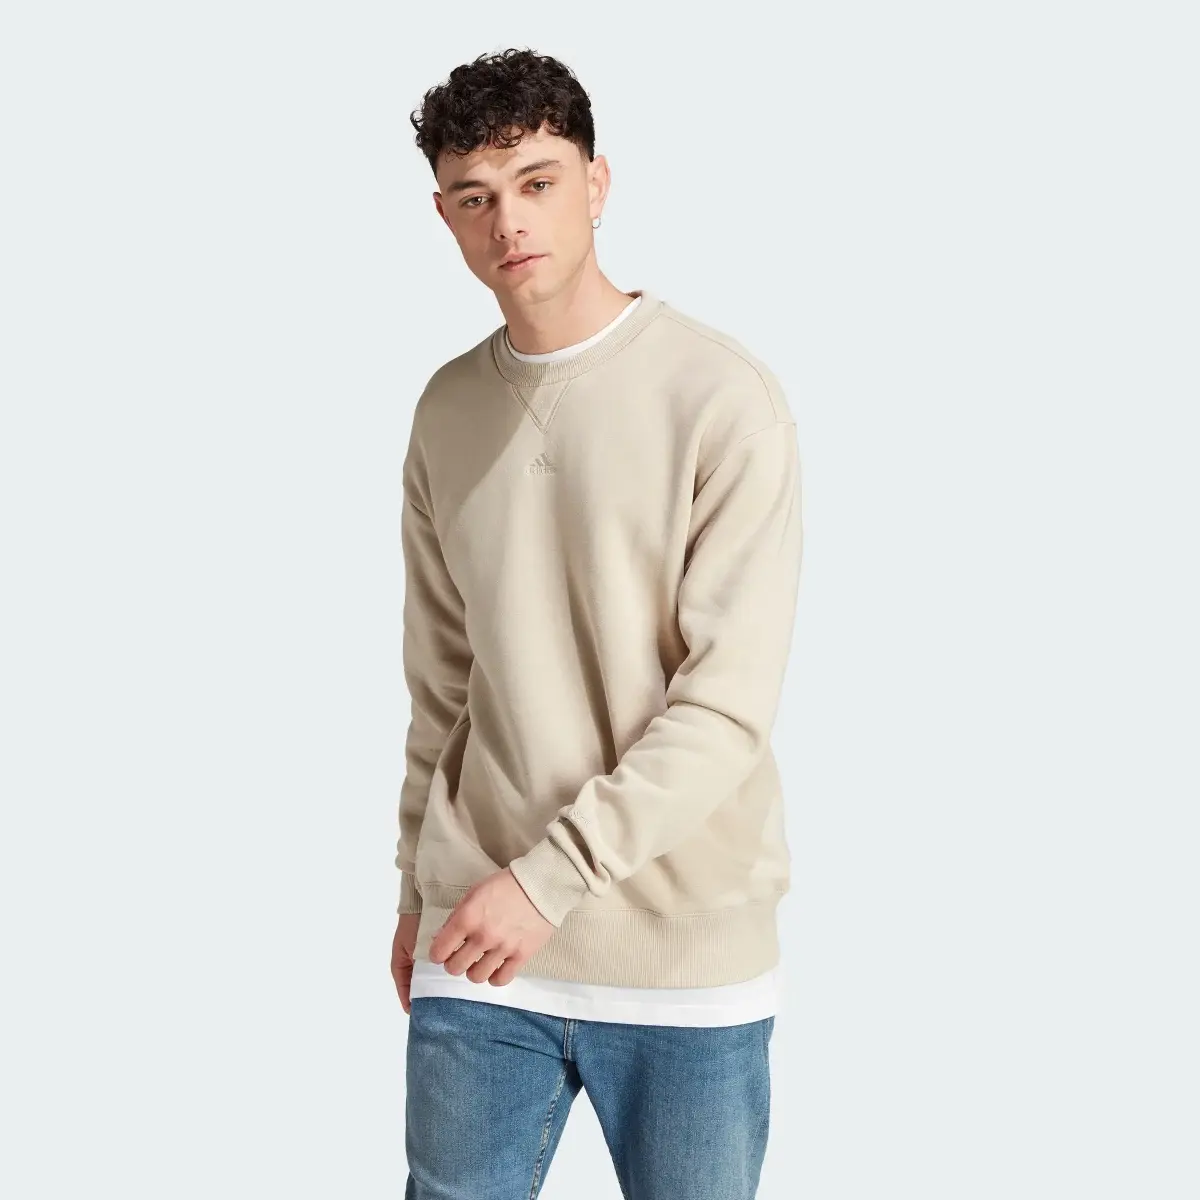 Adidas All SZN Fleece Sweatshirt. 2